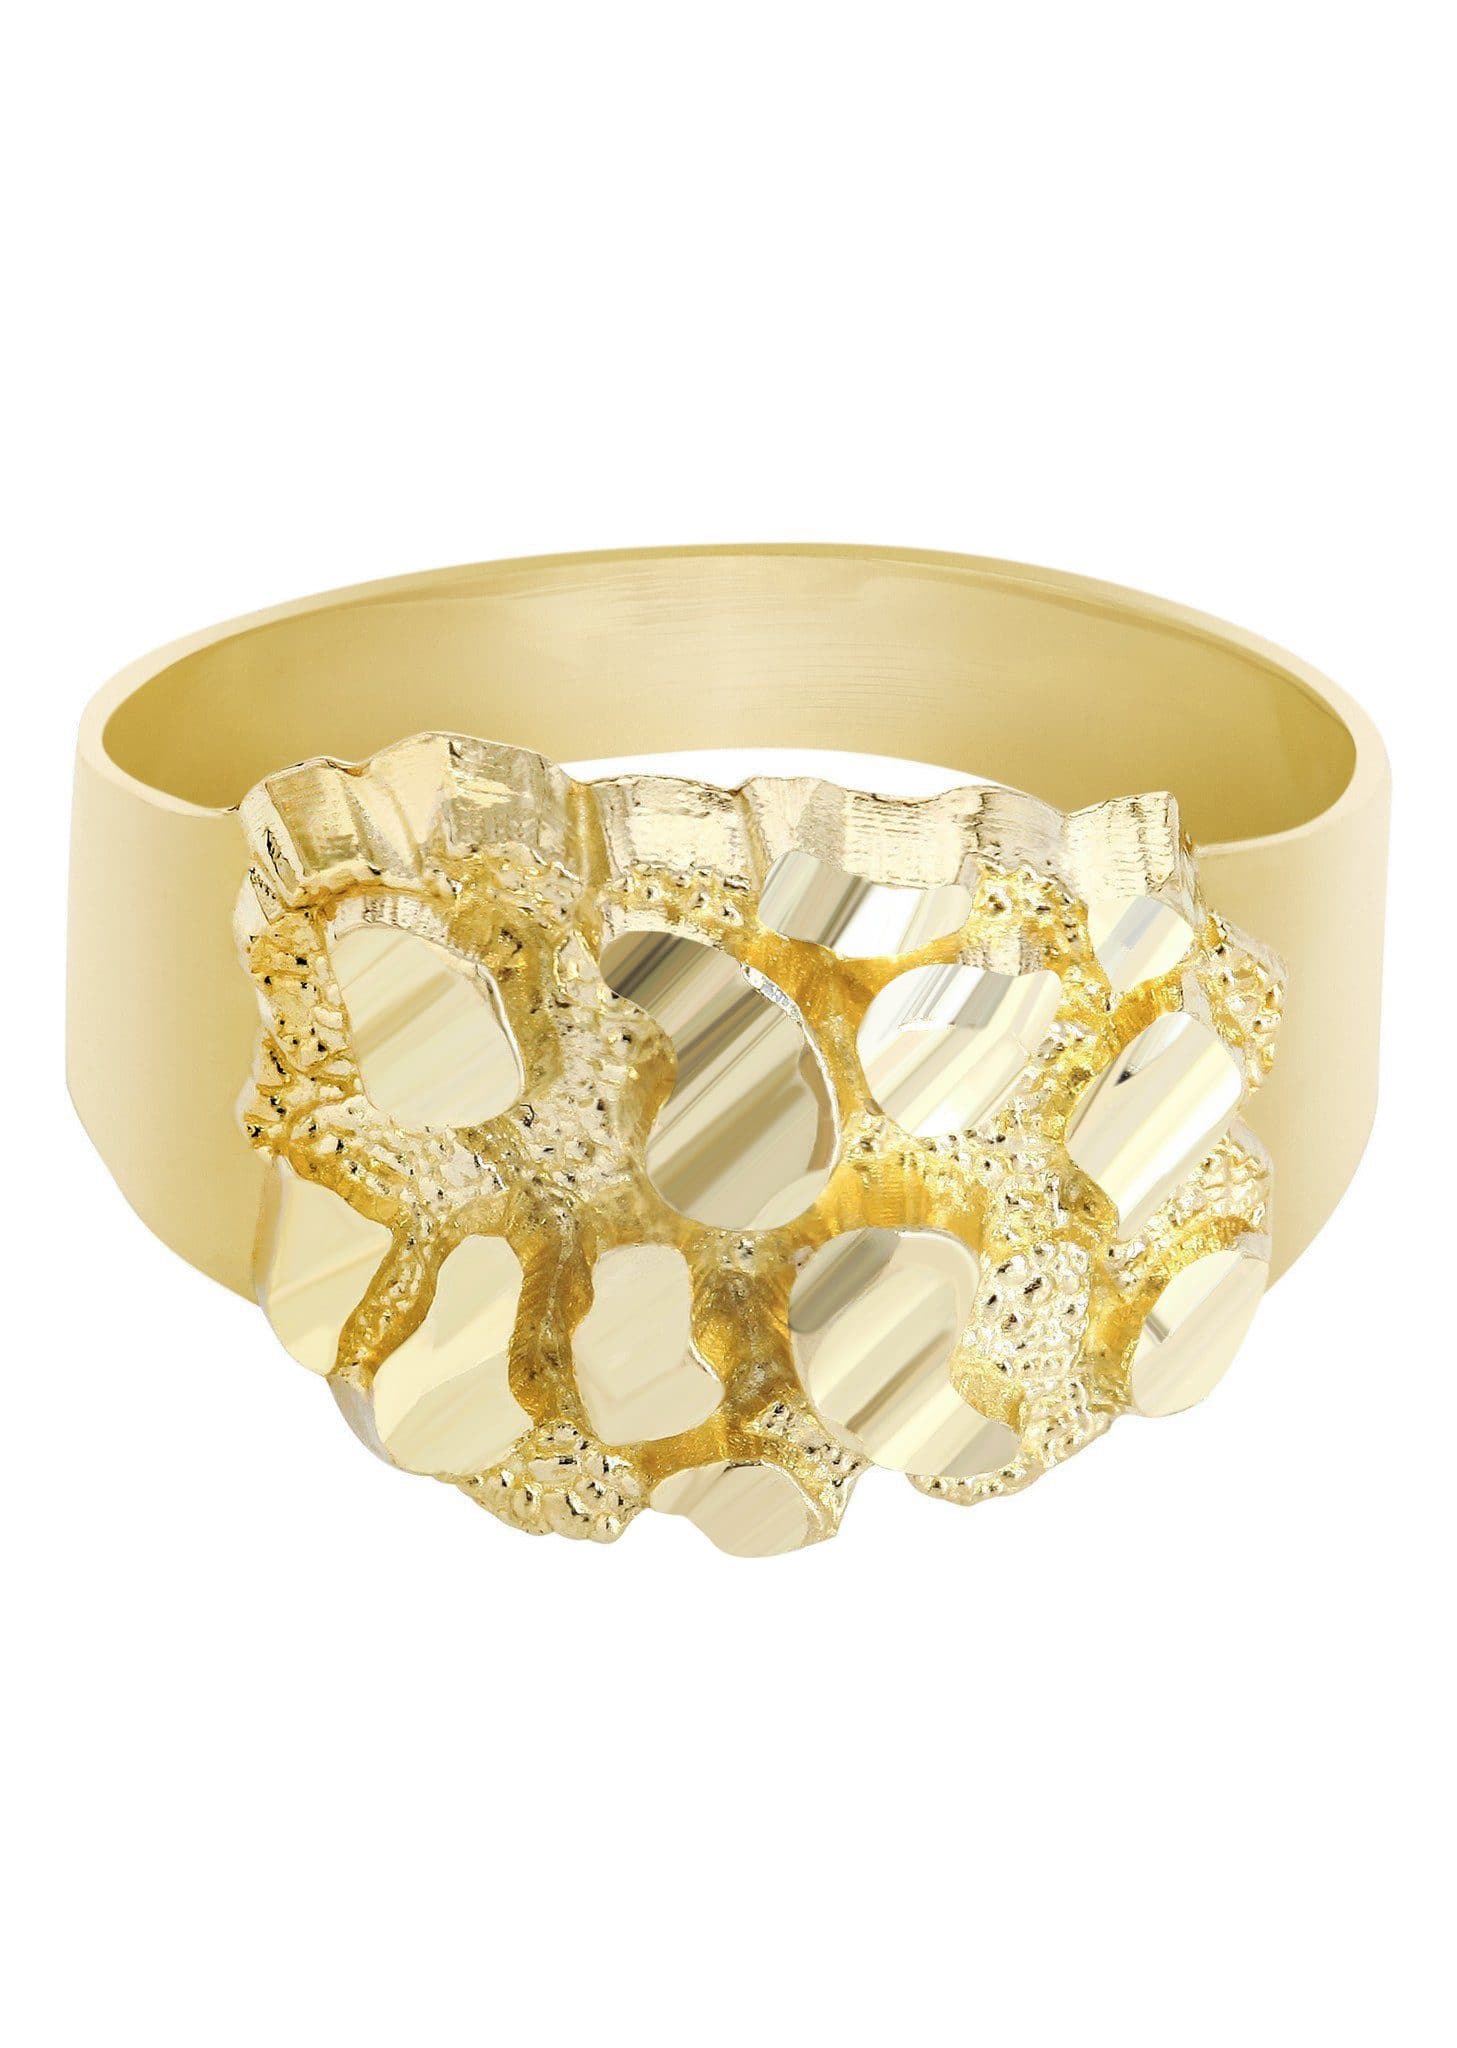 Jewelili 10K Yellow Gold 1/4 Cttw Natural White Round Diamond Mens Ring,  Size 10|Amazon.com